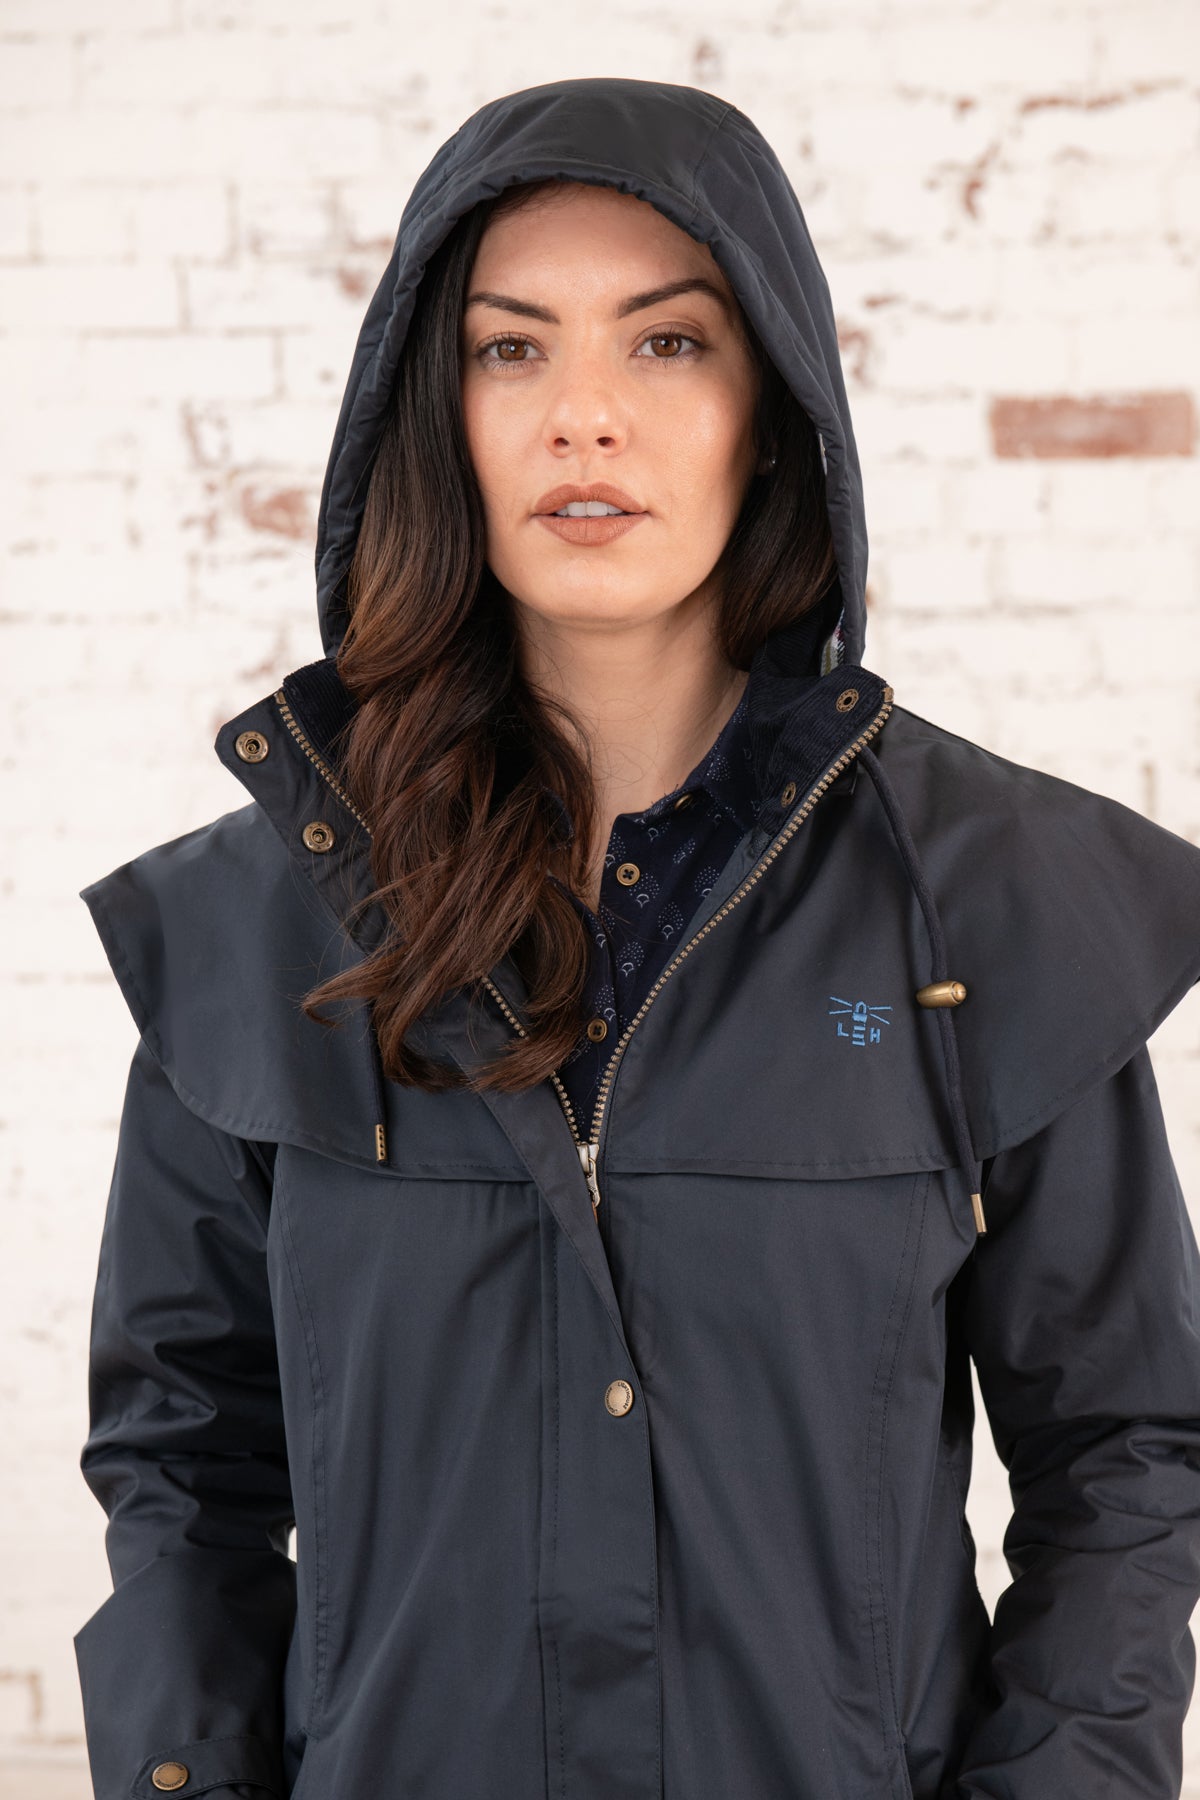 Women's Waterproof Jackets, Raincoats & Rain Jackets